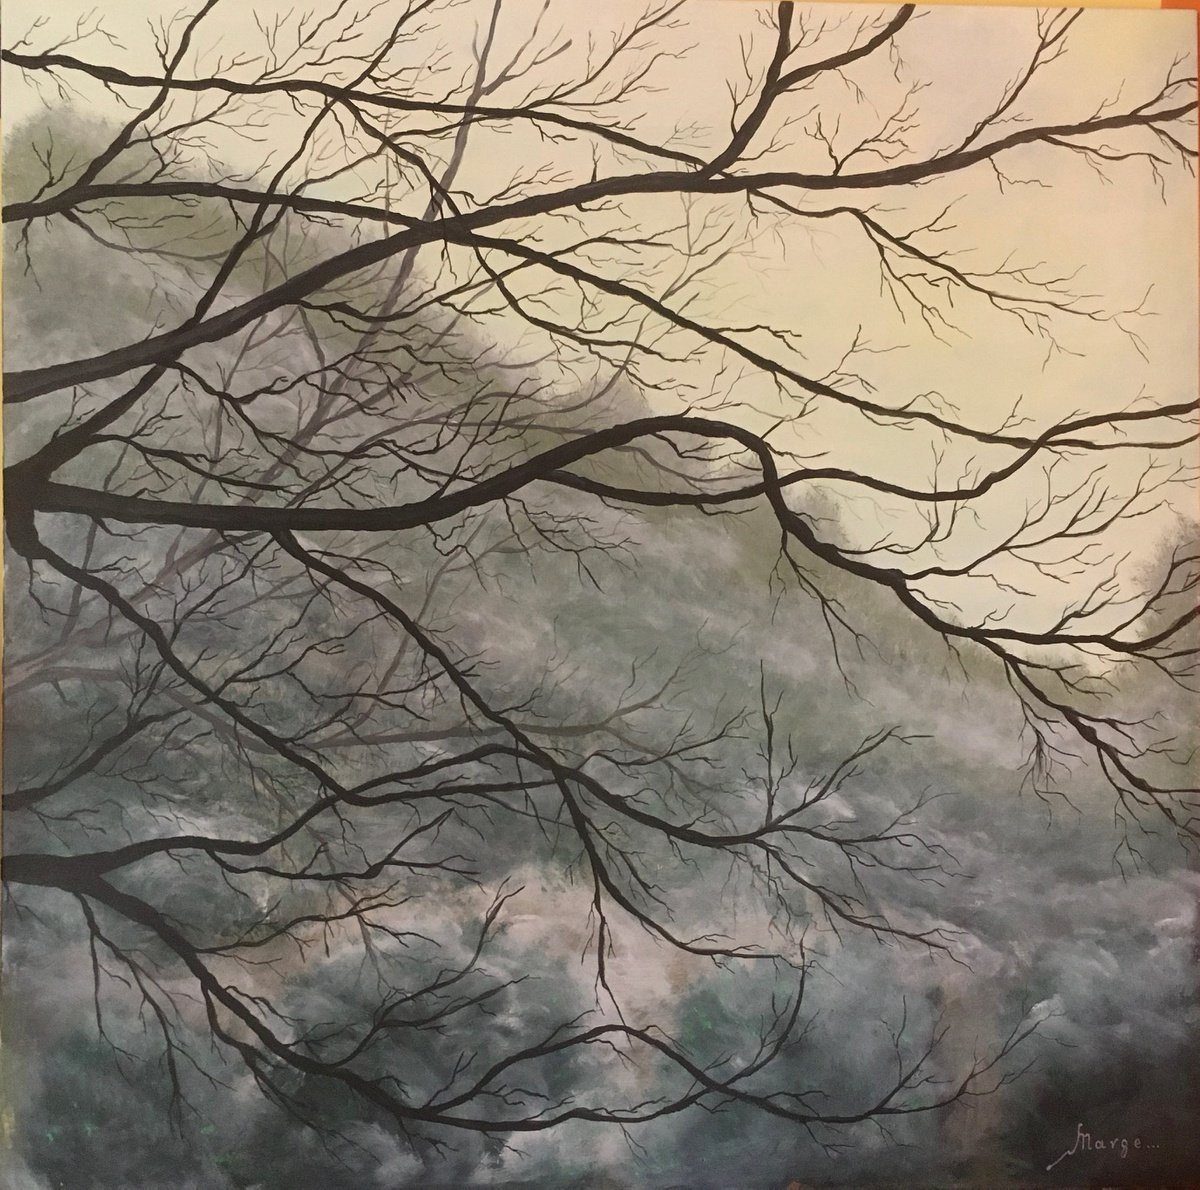 ?orning fog in the forest by Margarita Telianidis